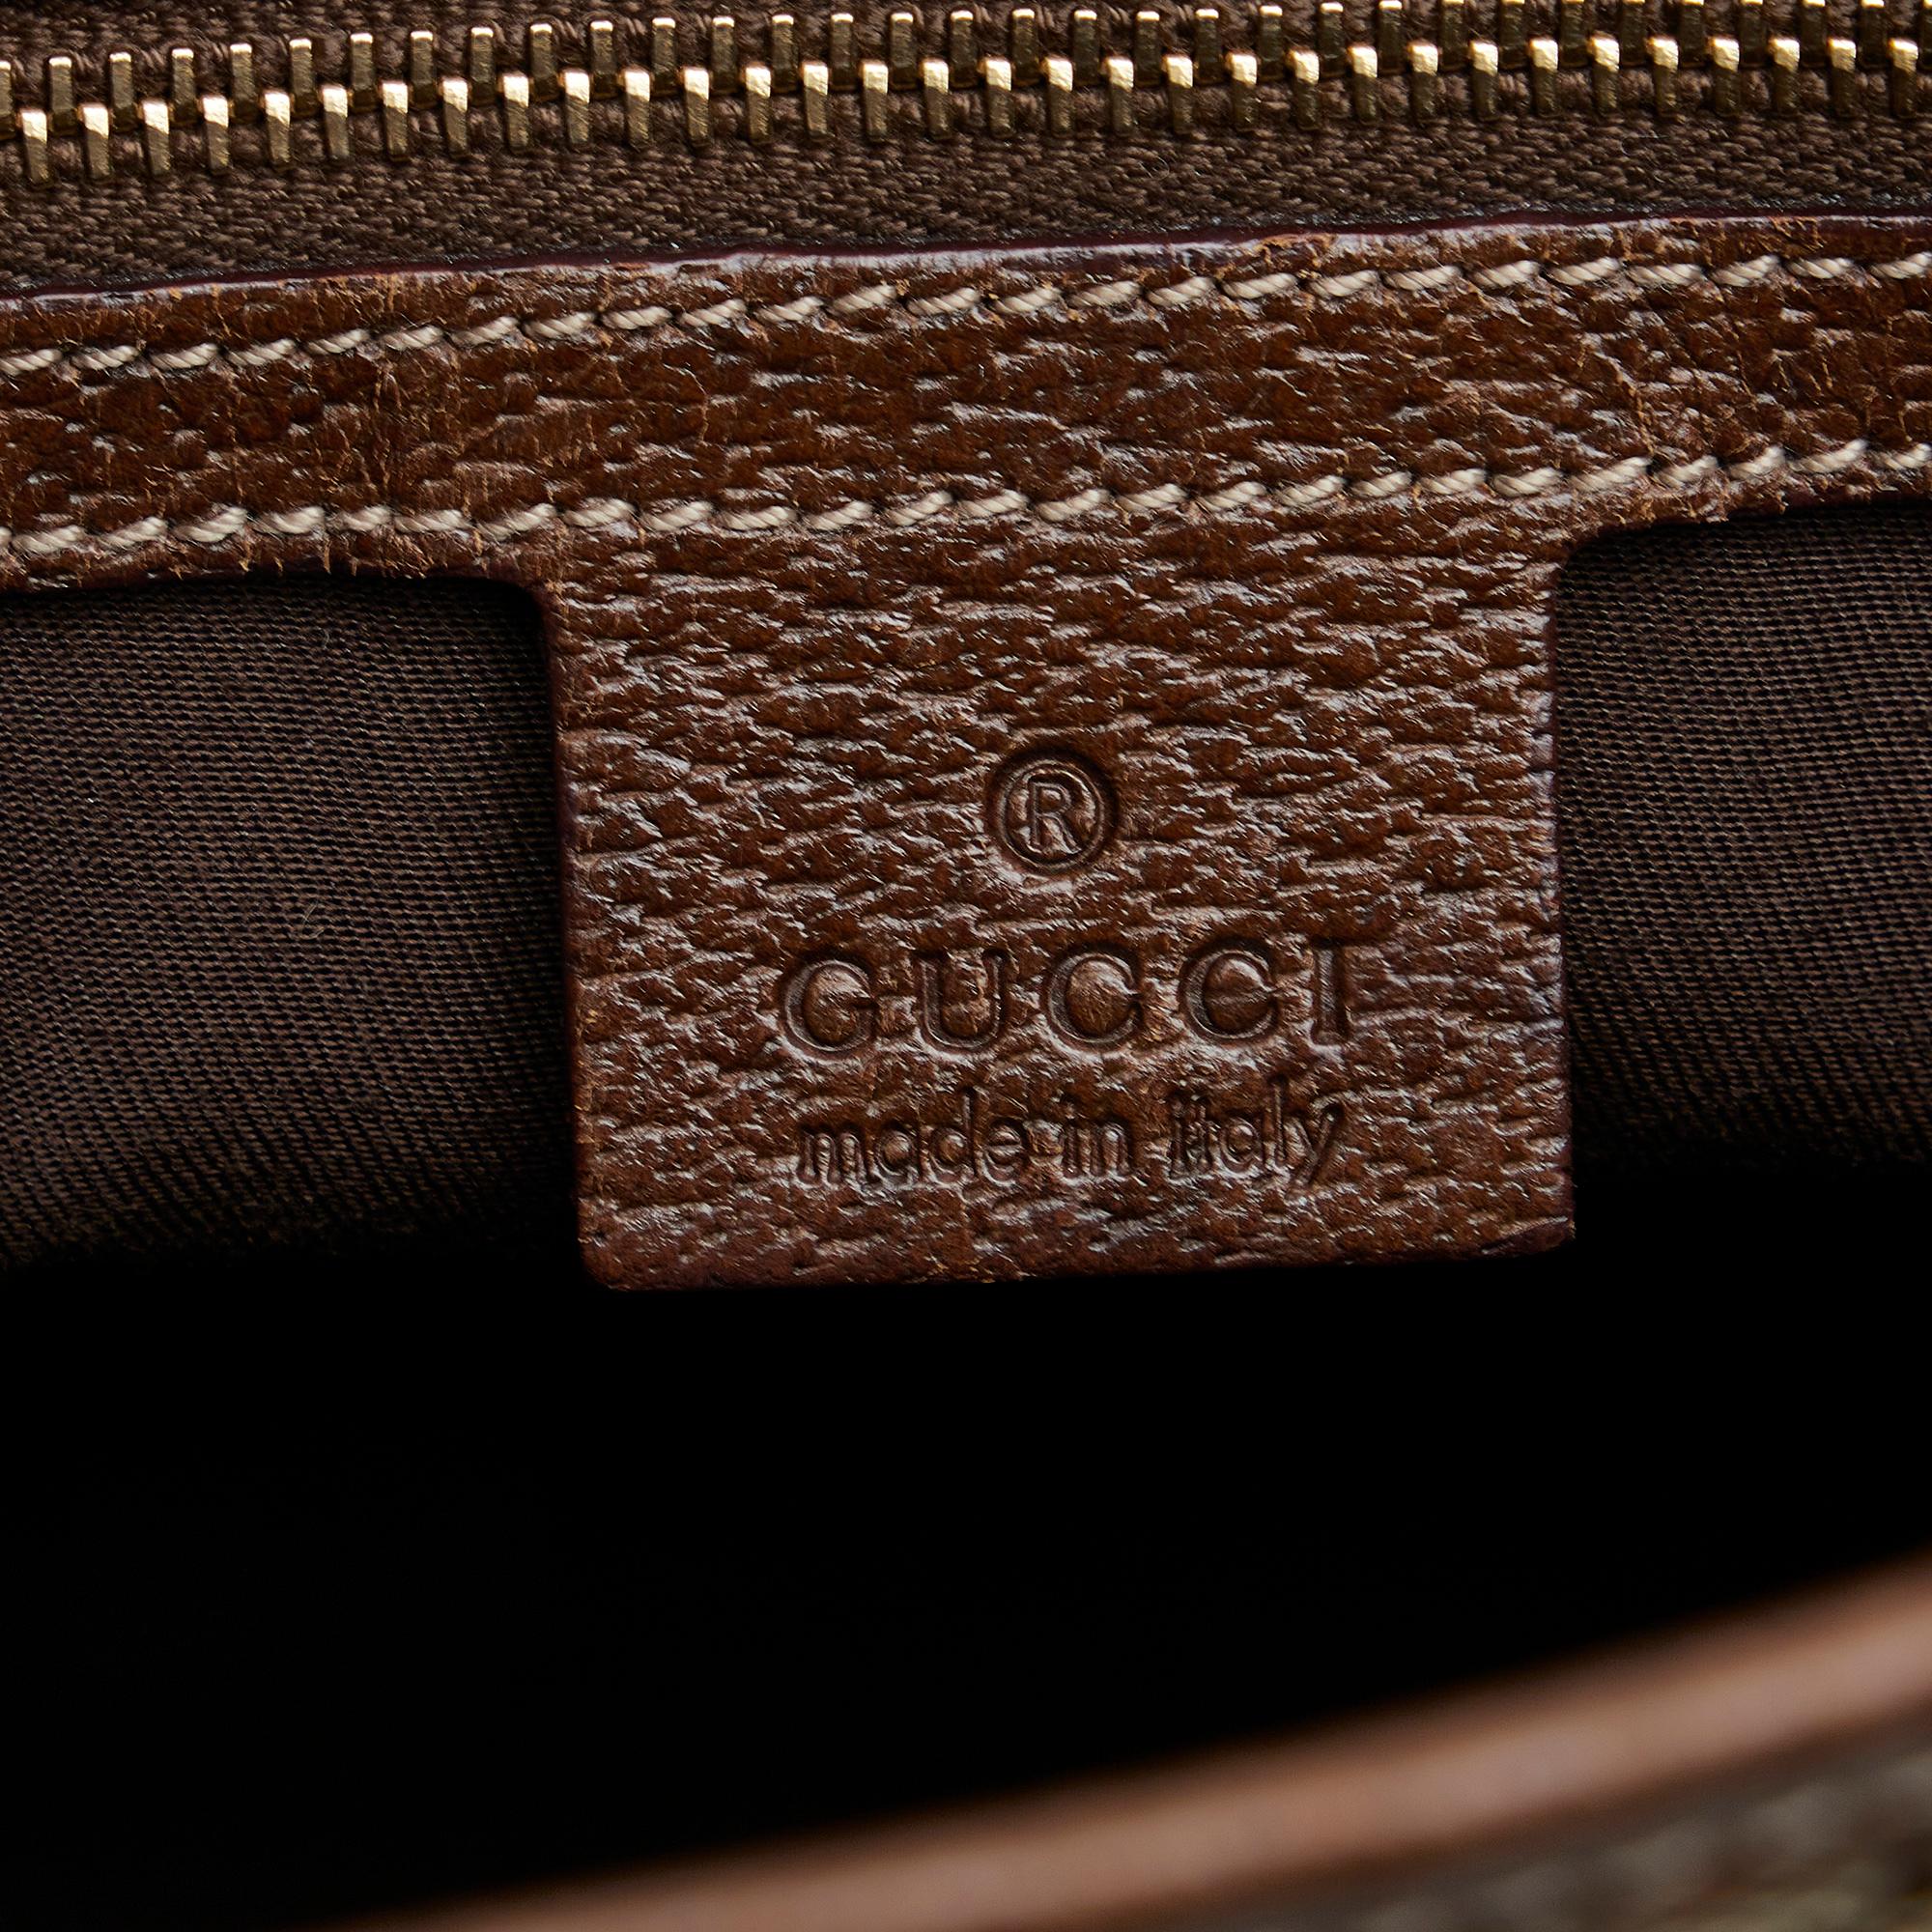 Gucci GG Canvas Jackie Piston Lock Handbag